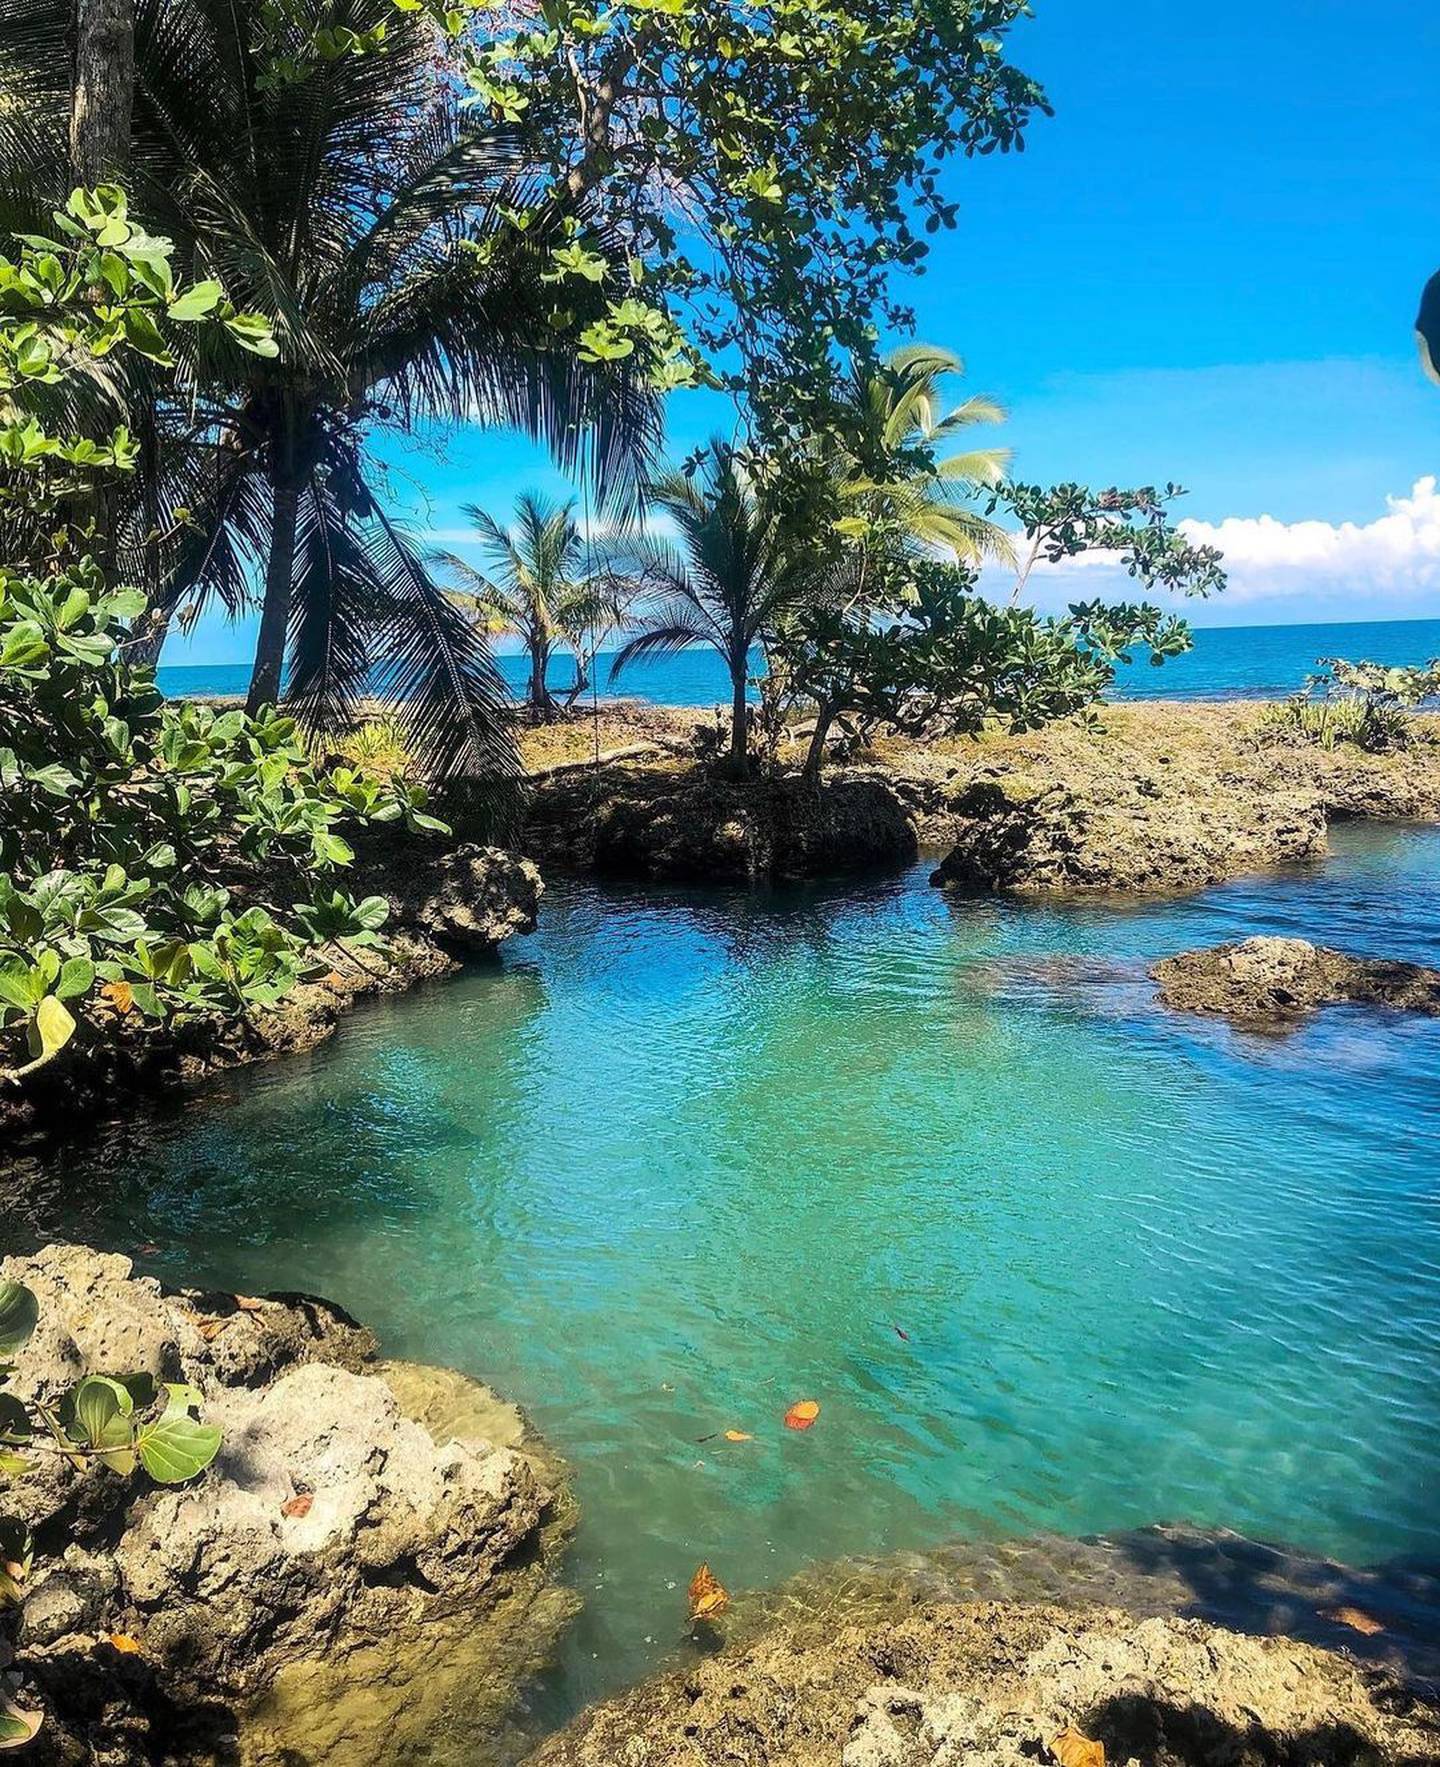 Así es la piscina natural en Playa Negra. (Foto: Instagram)